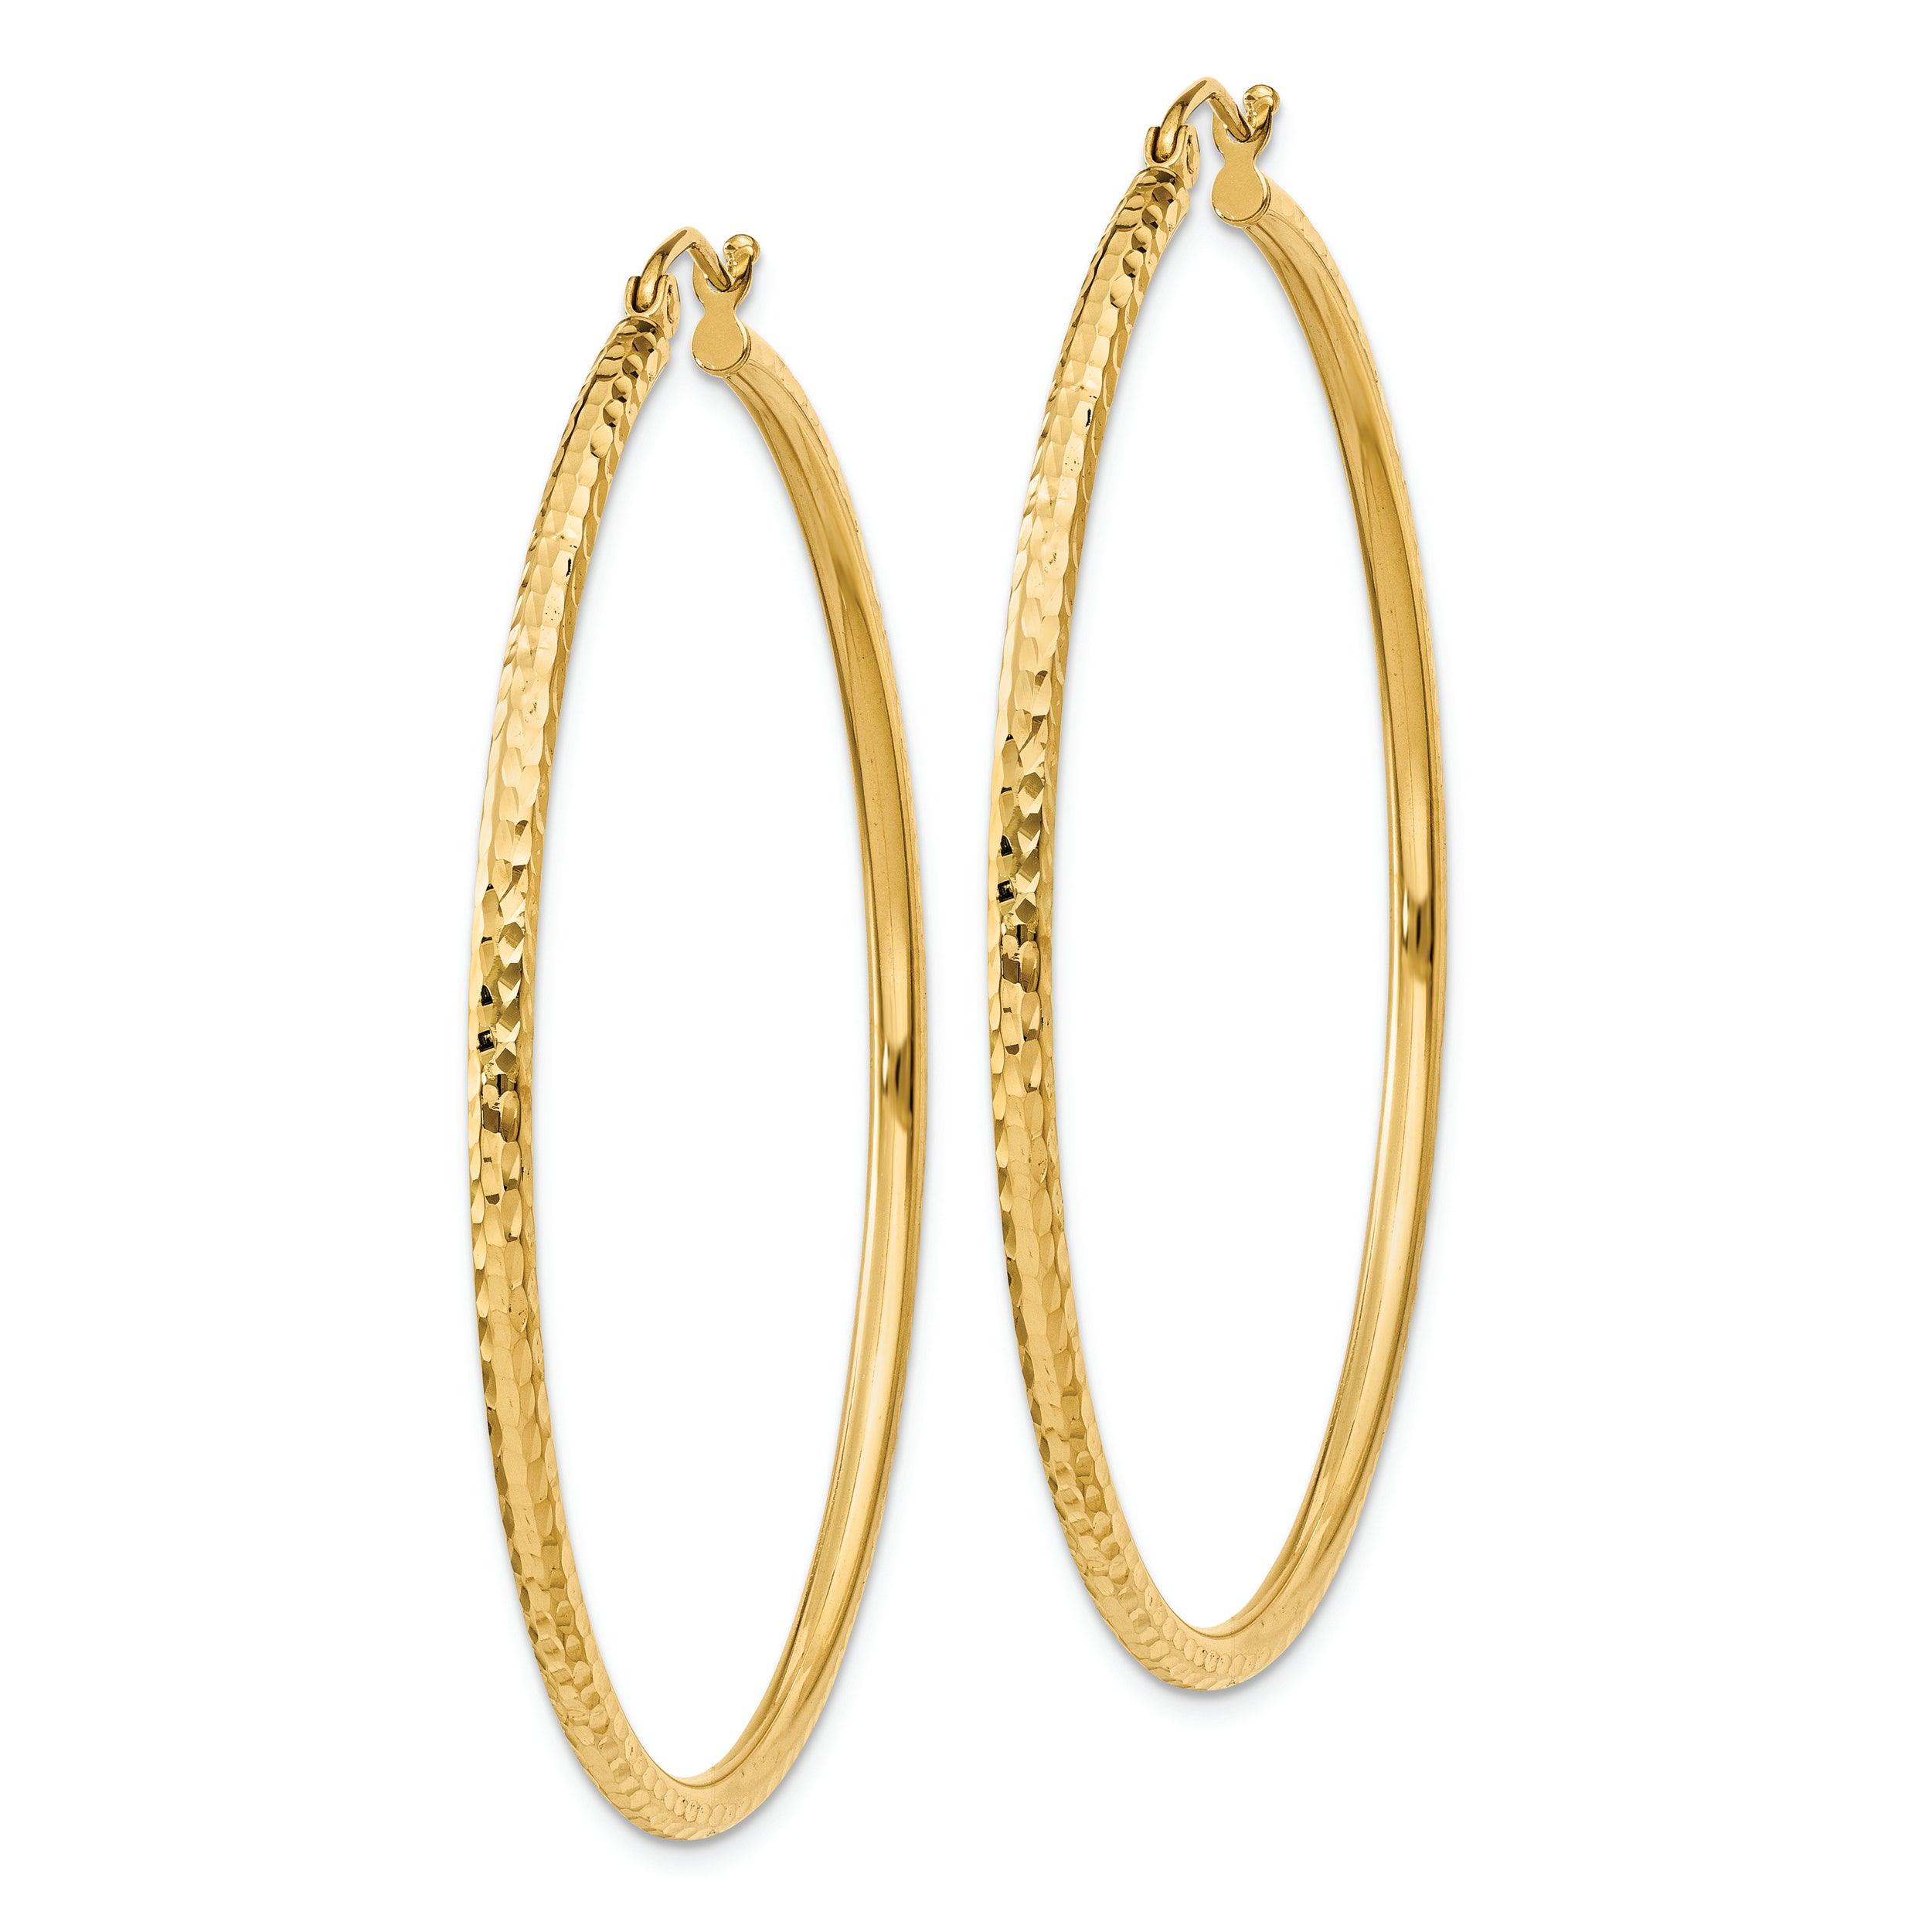 Quality Gold Earrings 14k Diamond-cut 2mm Round Tube Hoop Earrings